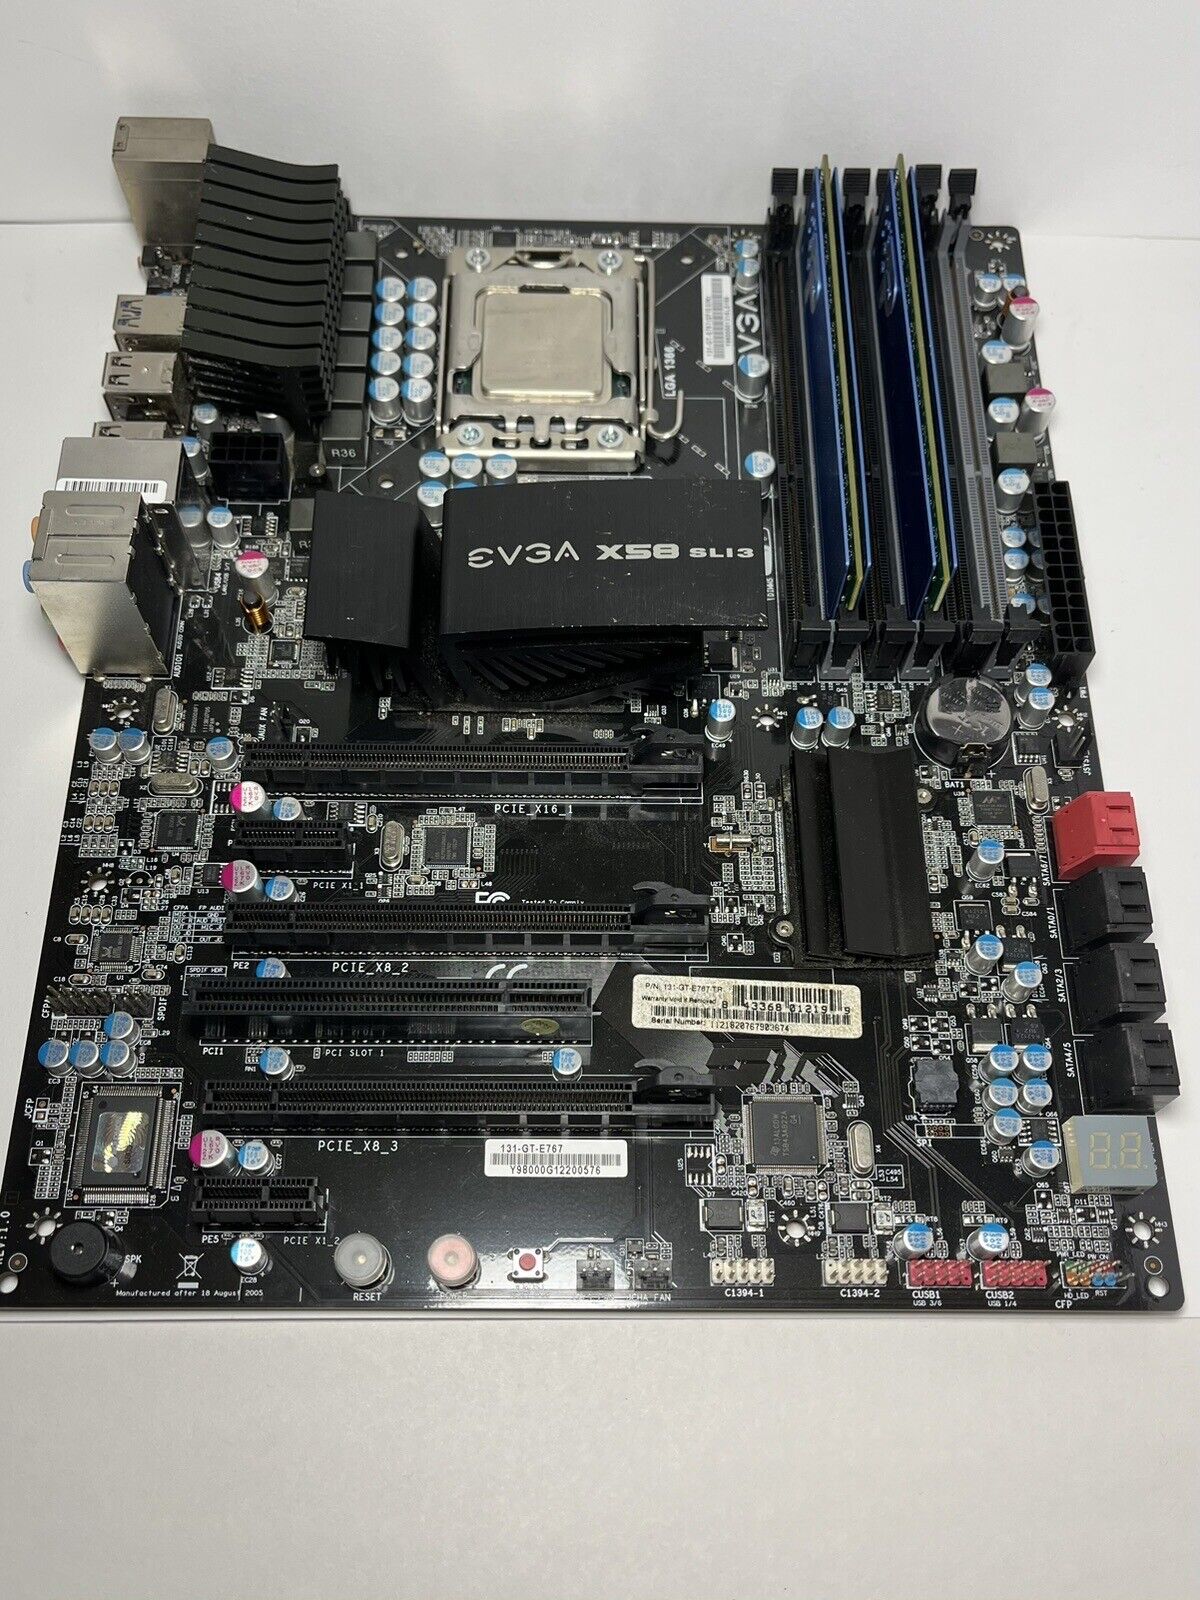 EVGA X58 SLI3 LGA 1366 DDR3 ATX Motherboard CPU Combo AS IS READ DESCRIPTION